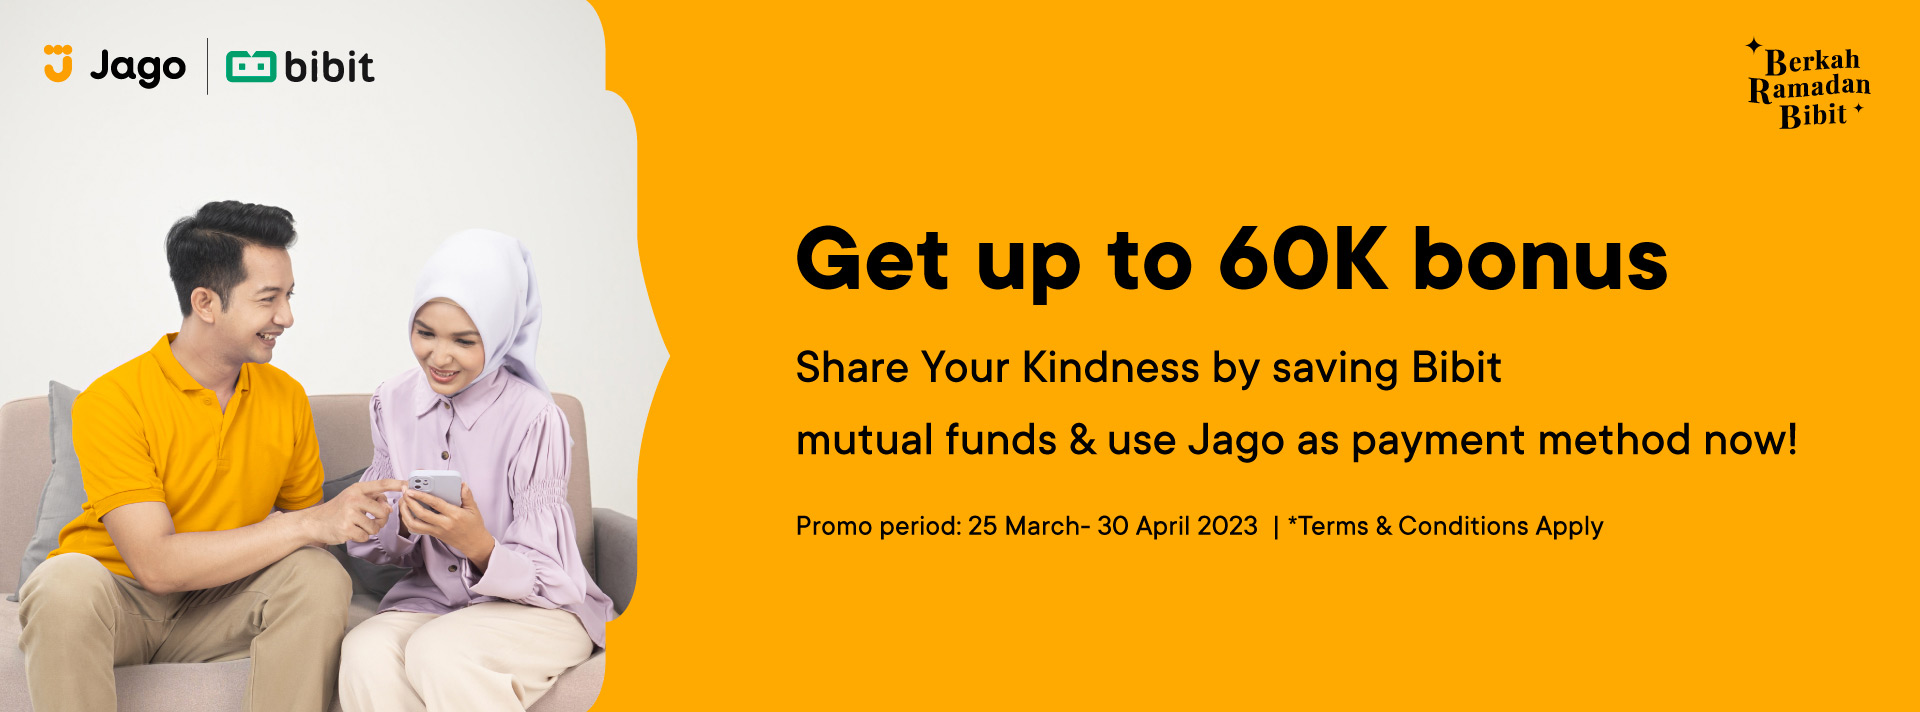 Jago x Bibit Cashback - Get up to 60K bonus!